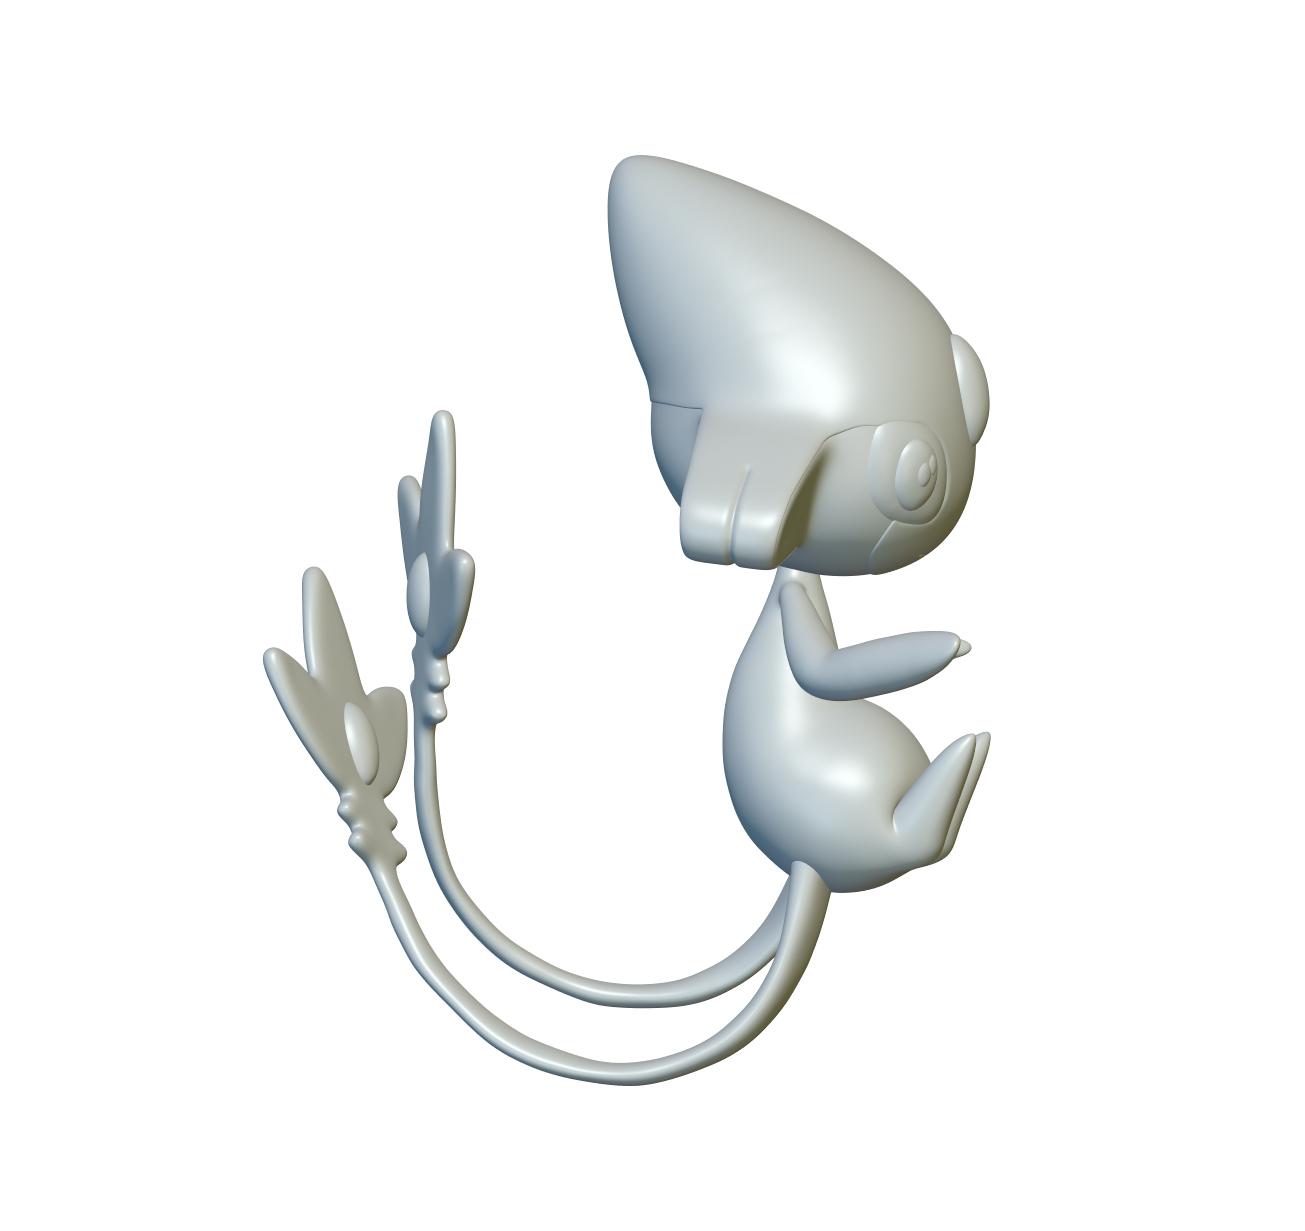 Pokemon Azelf #482 - Optimized for 3D Printing 3d model